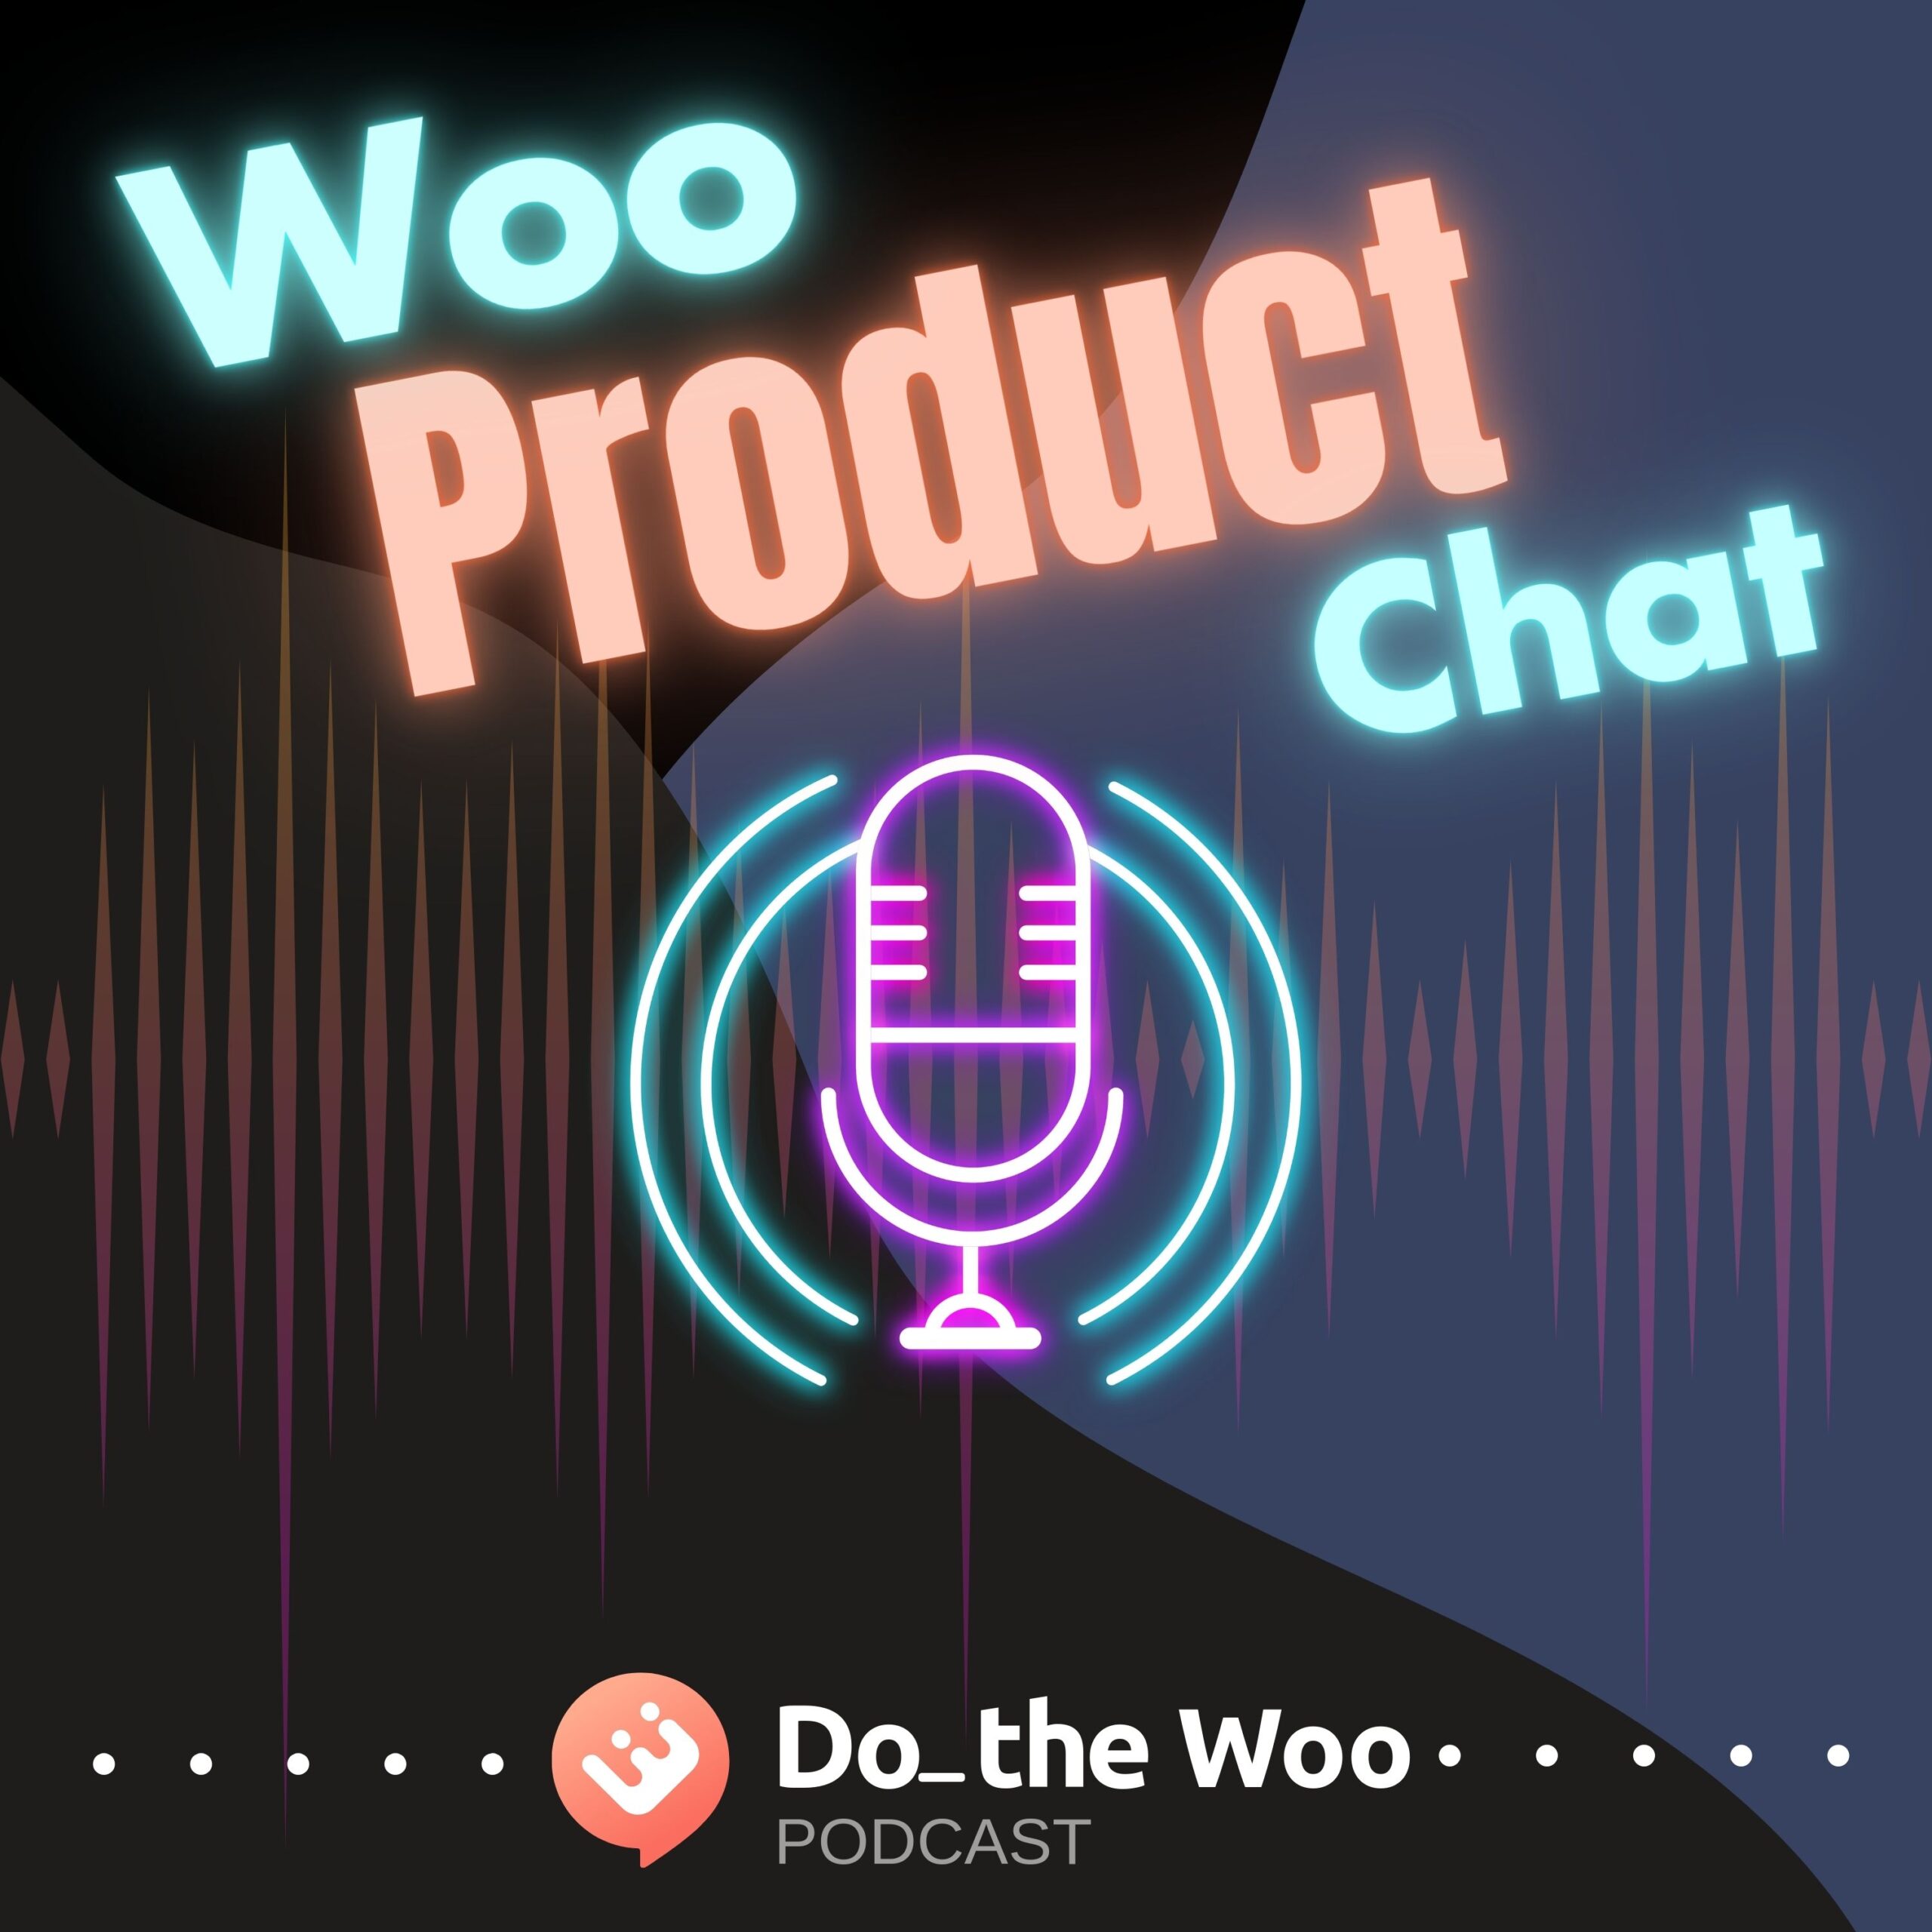 Woo ProductChat